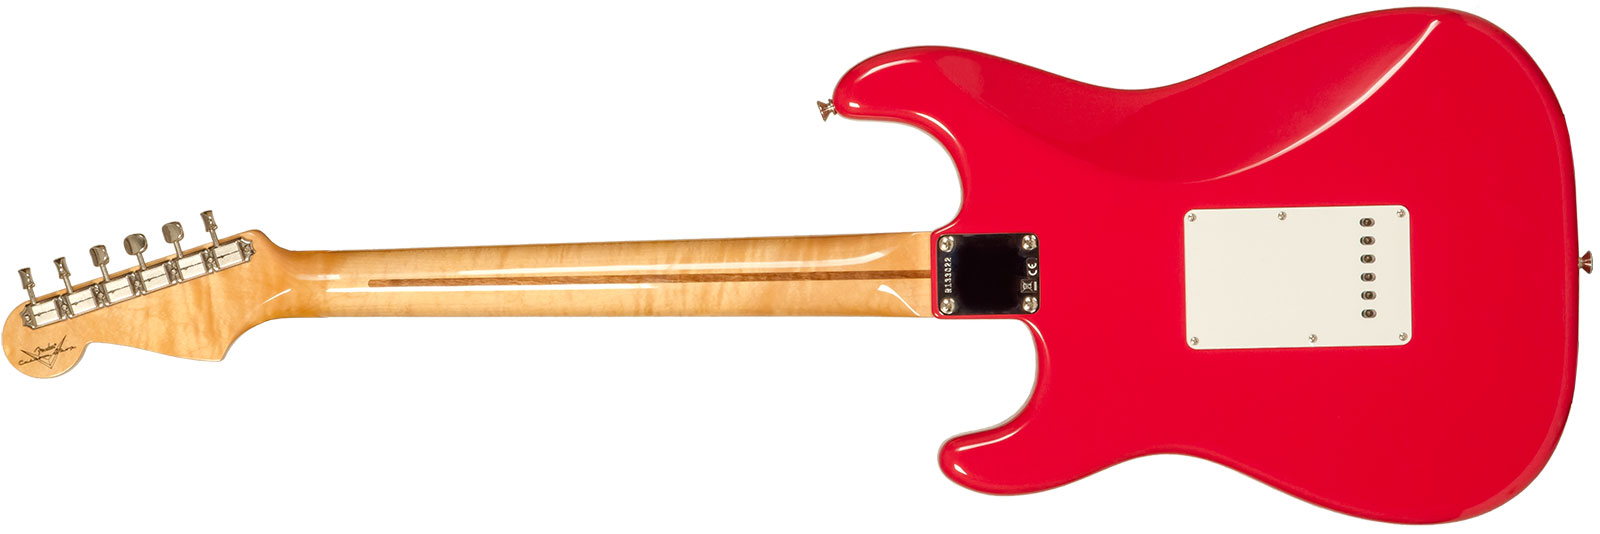 Fender Custom Shop Strat 1956 3s Trem Mn #r133022 - Nos Fiesta Red - Guitarra eléctrica con forma de str. - Variation 1